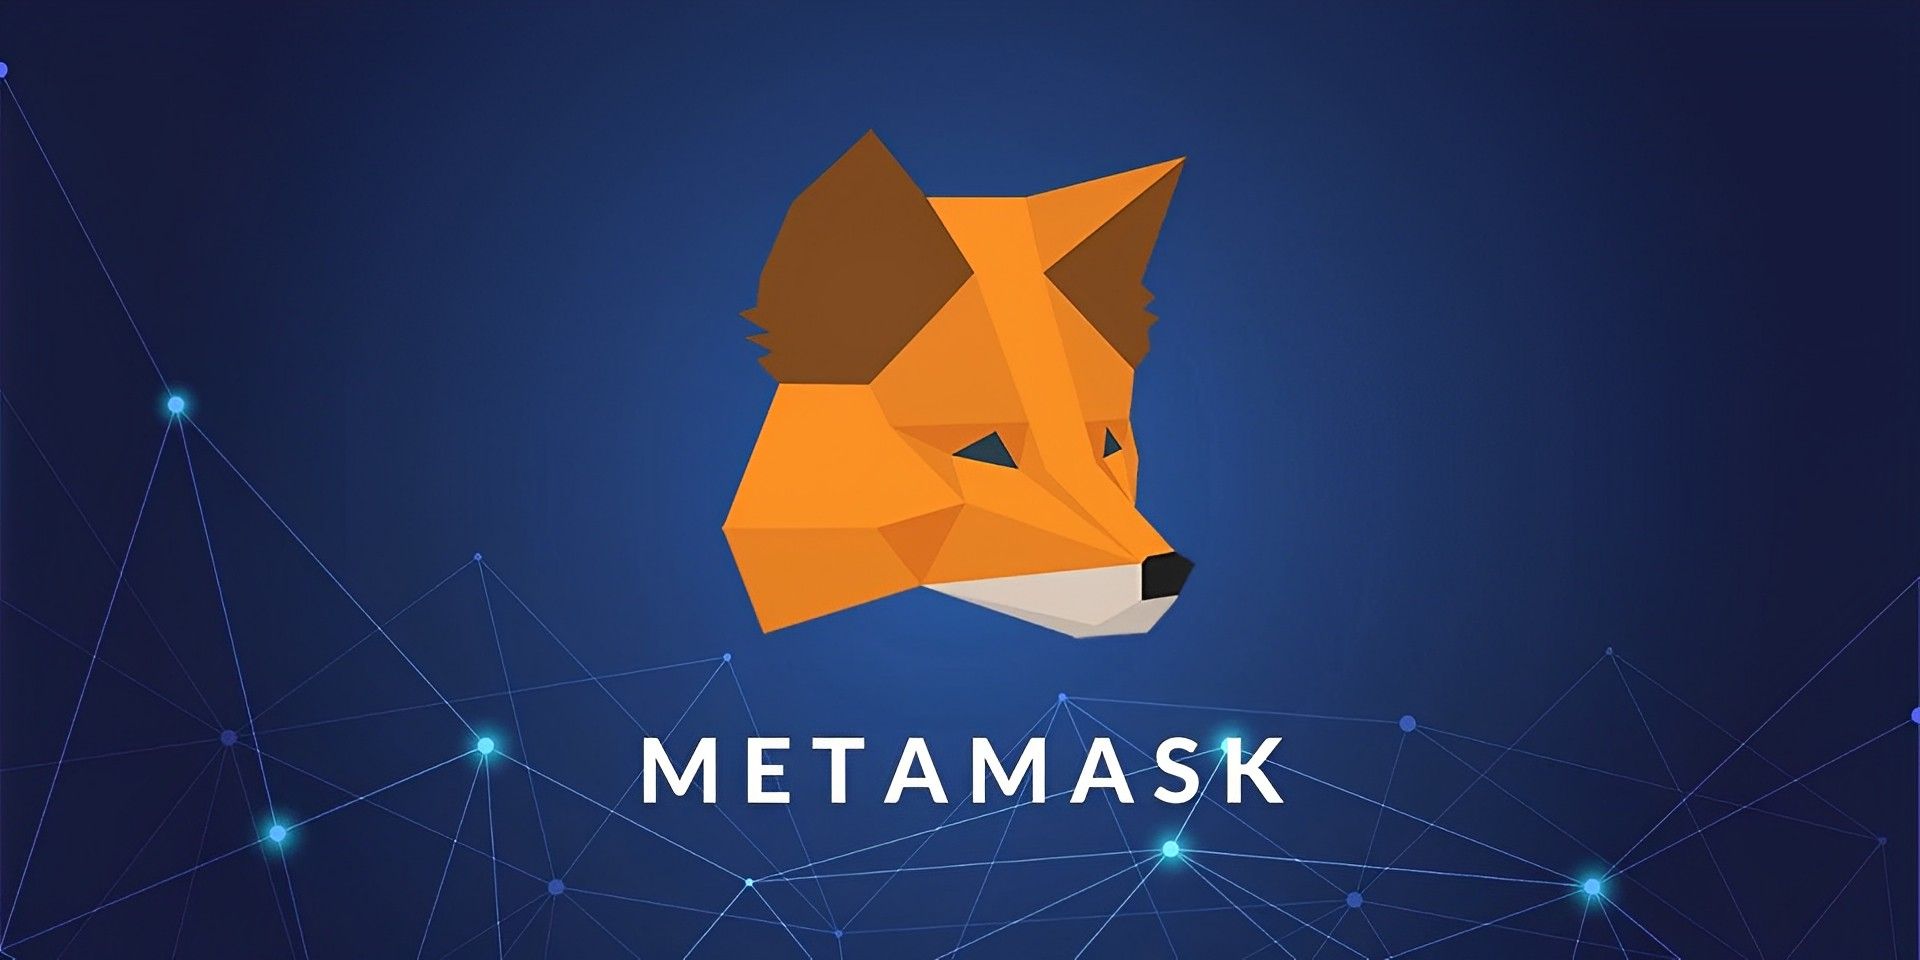 MetaMask is one of the leading self-custodial wallets in 2023